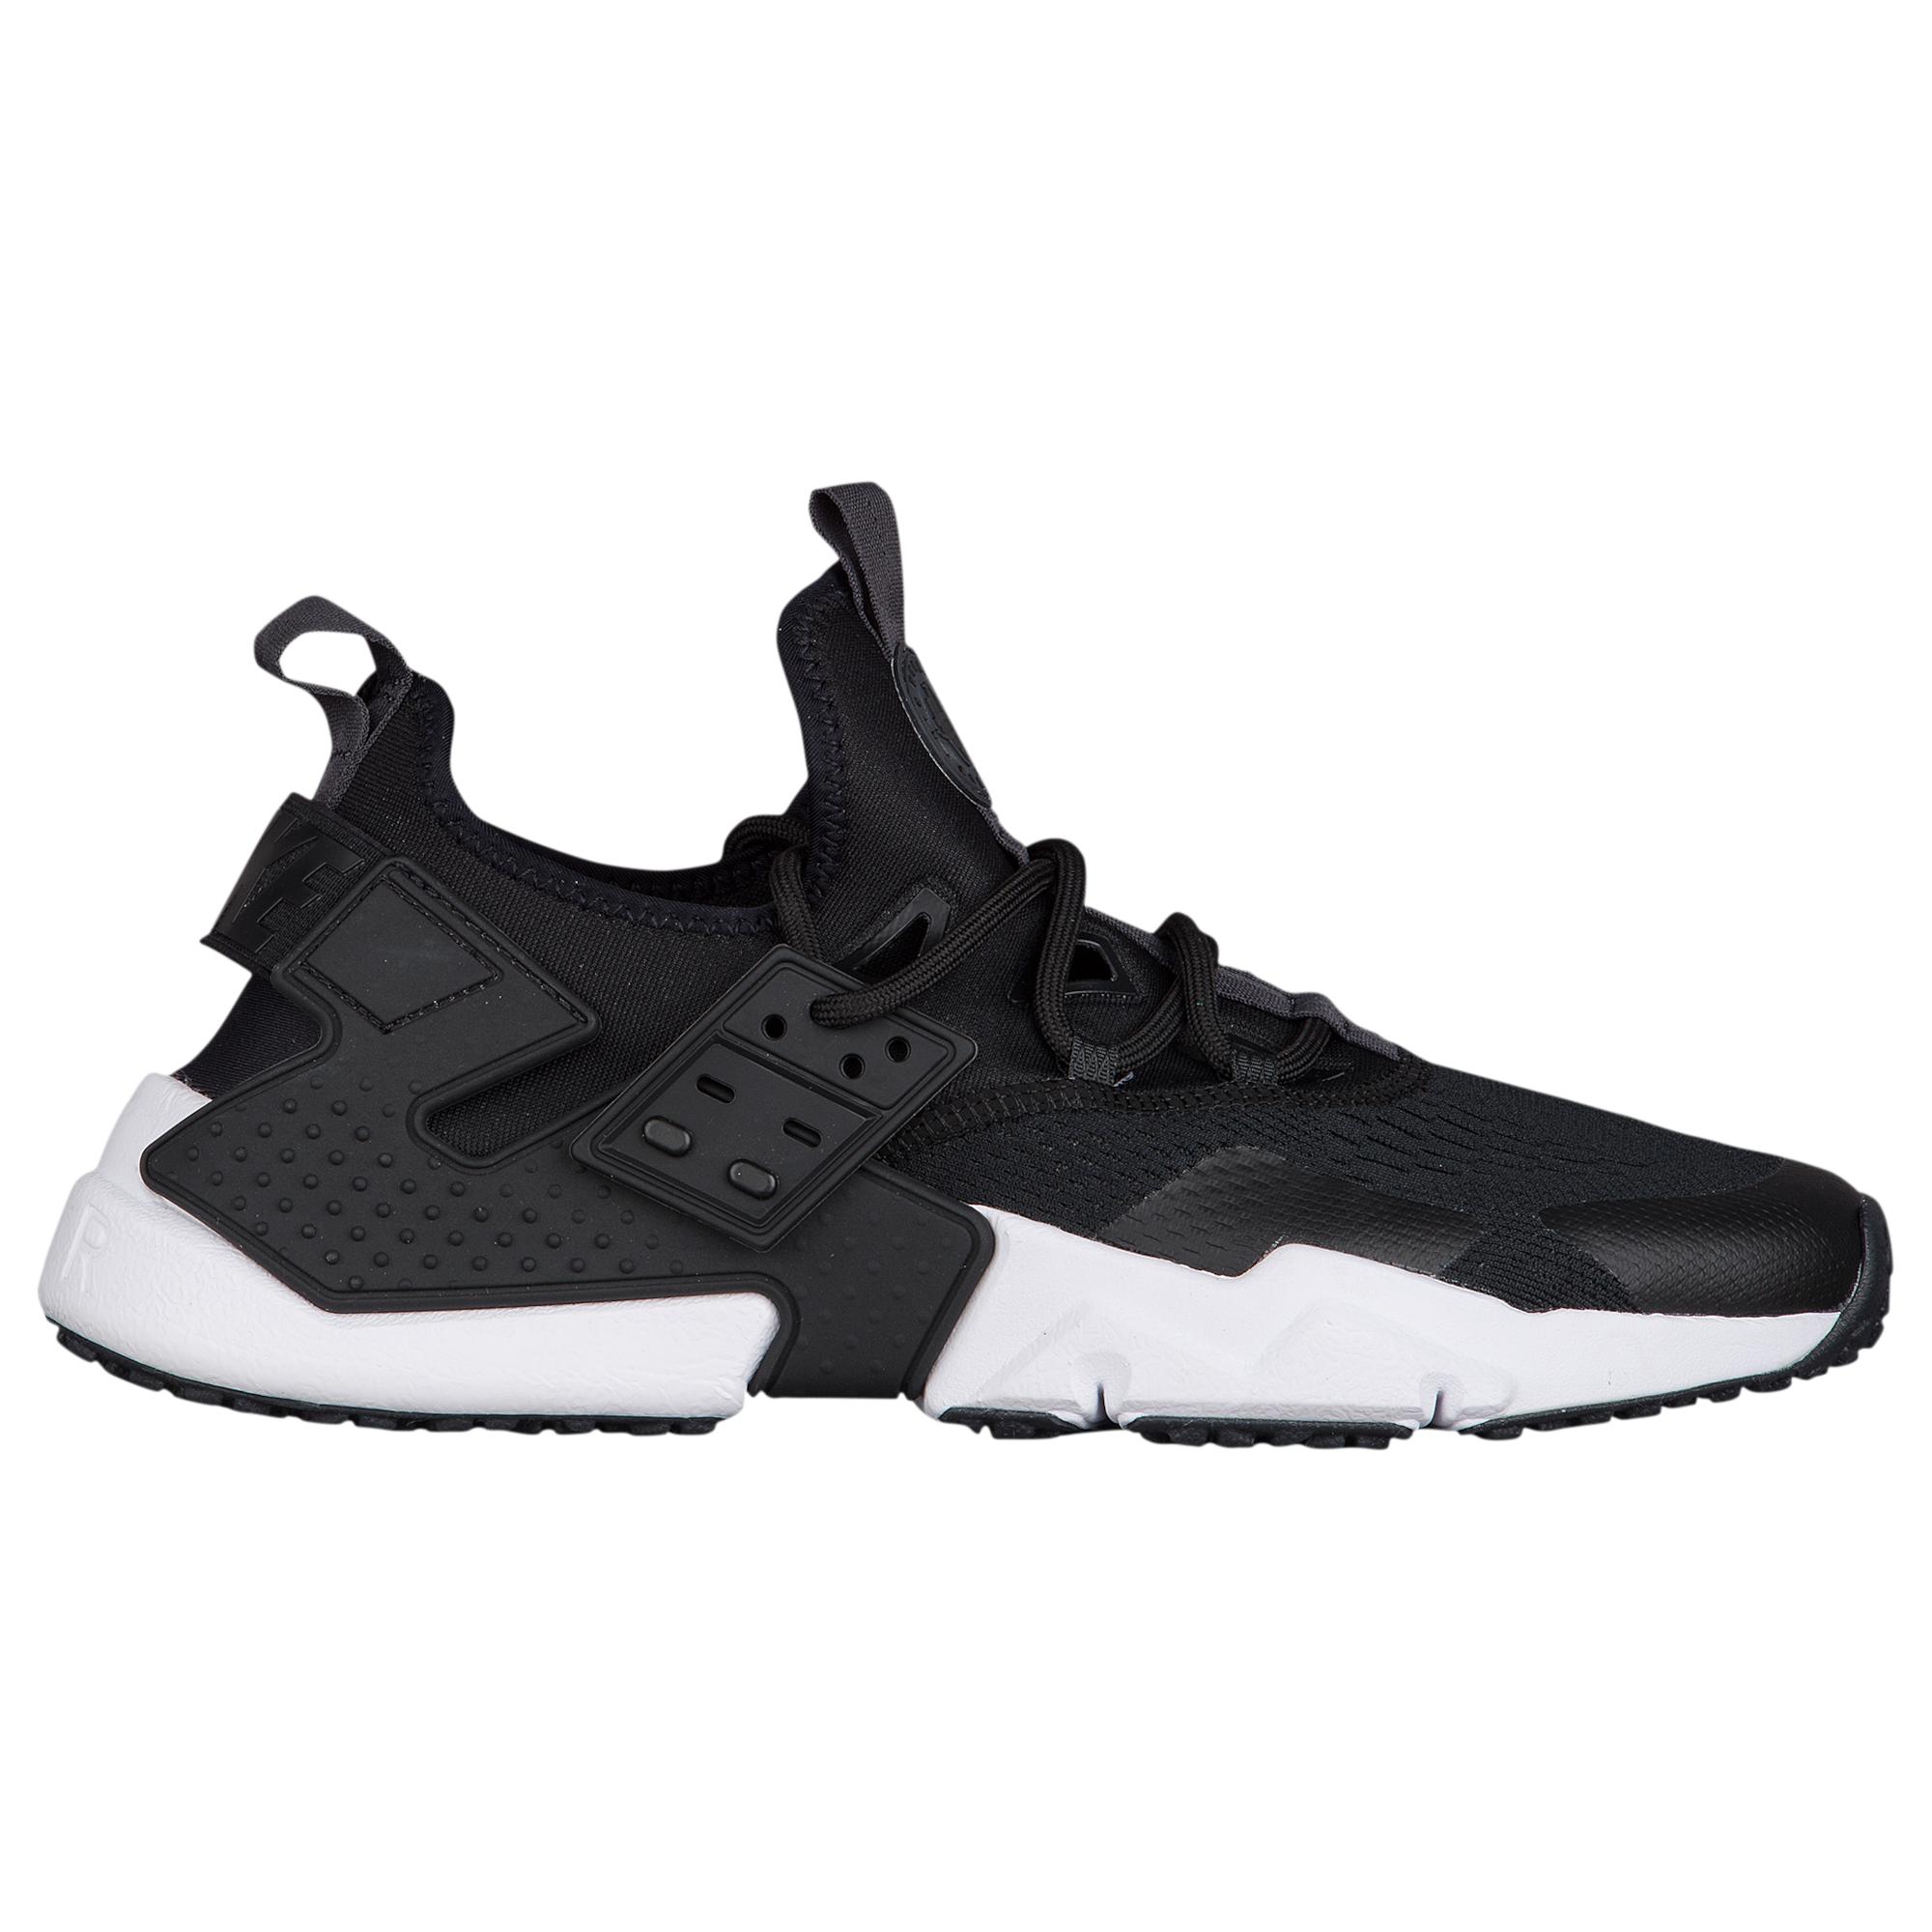 Nike Rubber Air Huarache Drift Br Running Shoes in Black/Anthracite White  (Black) for Men - Lyst